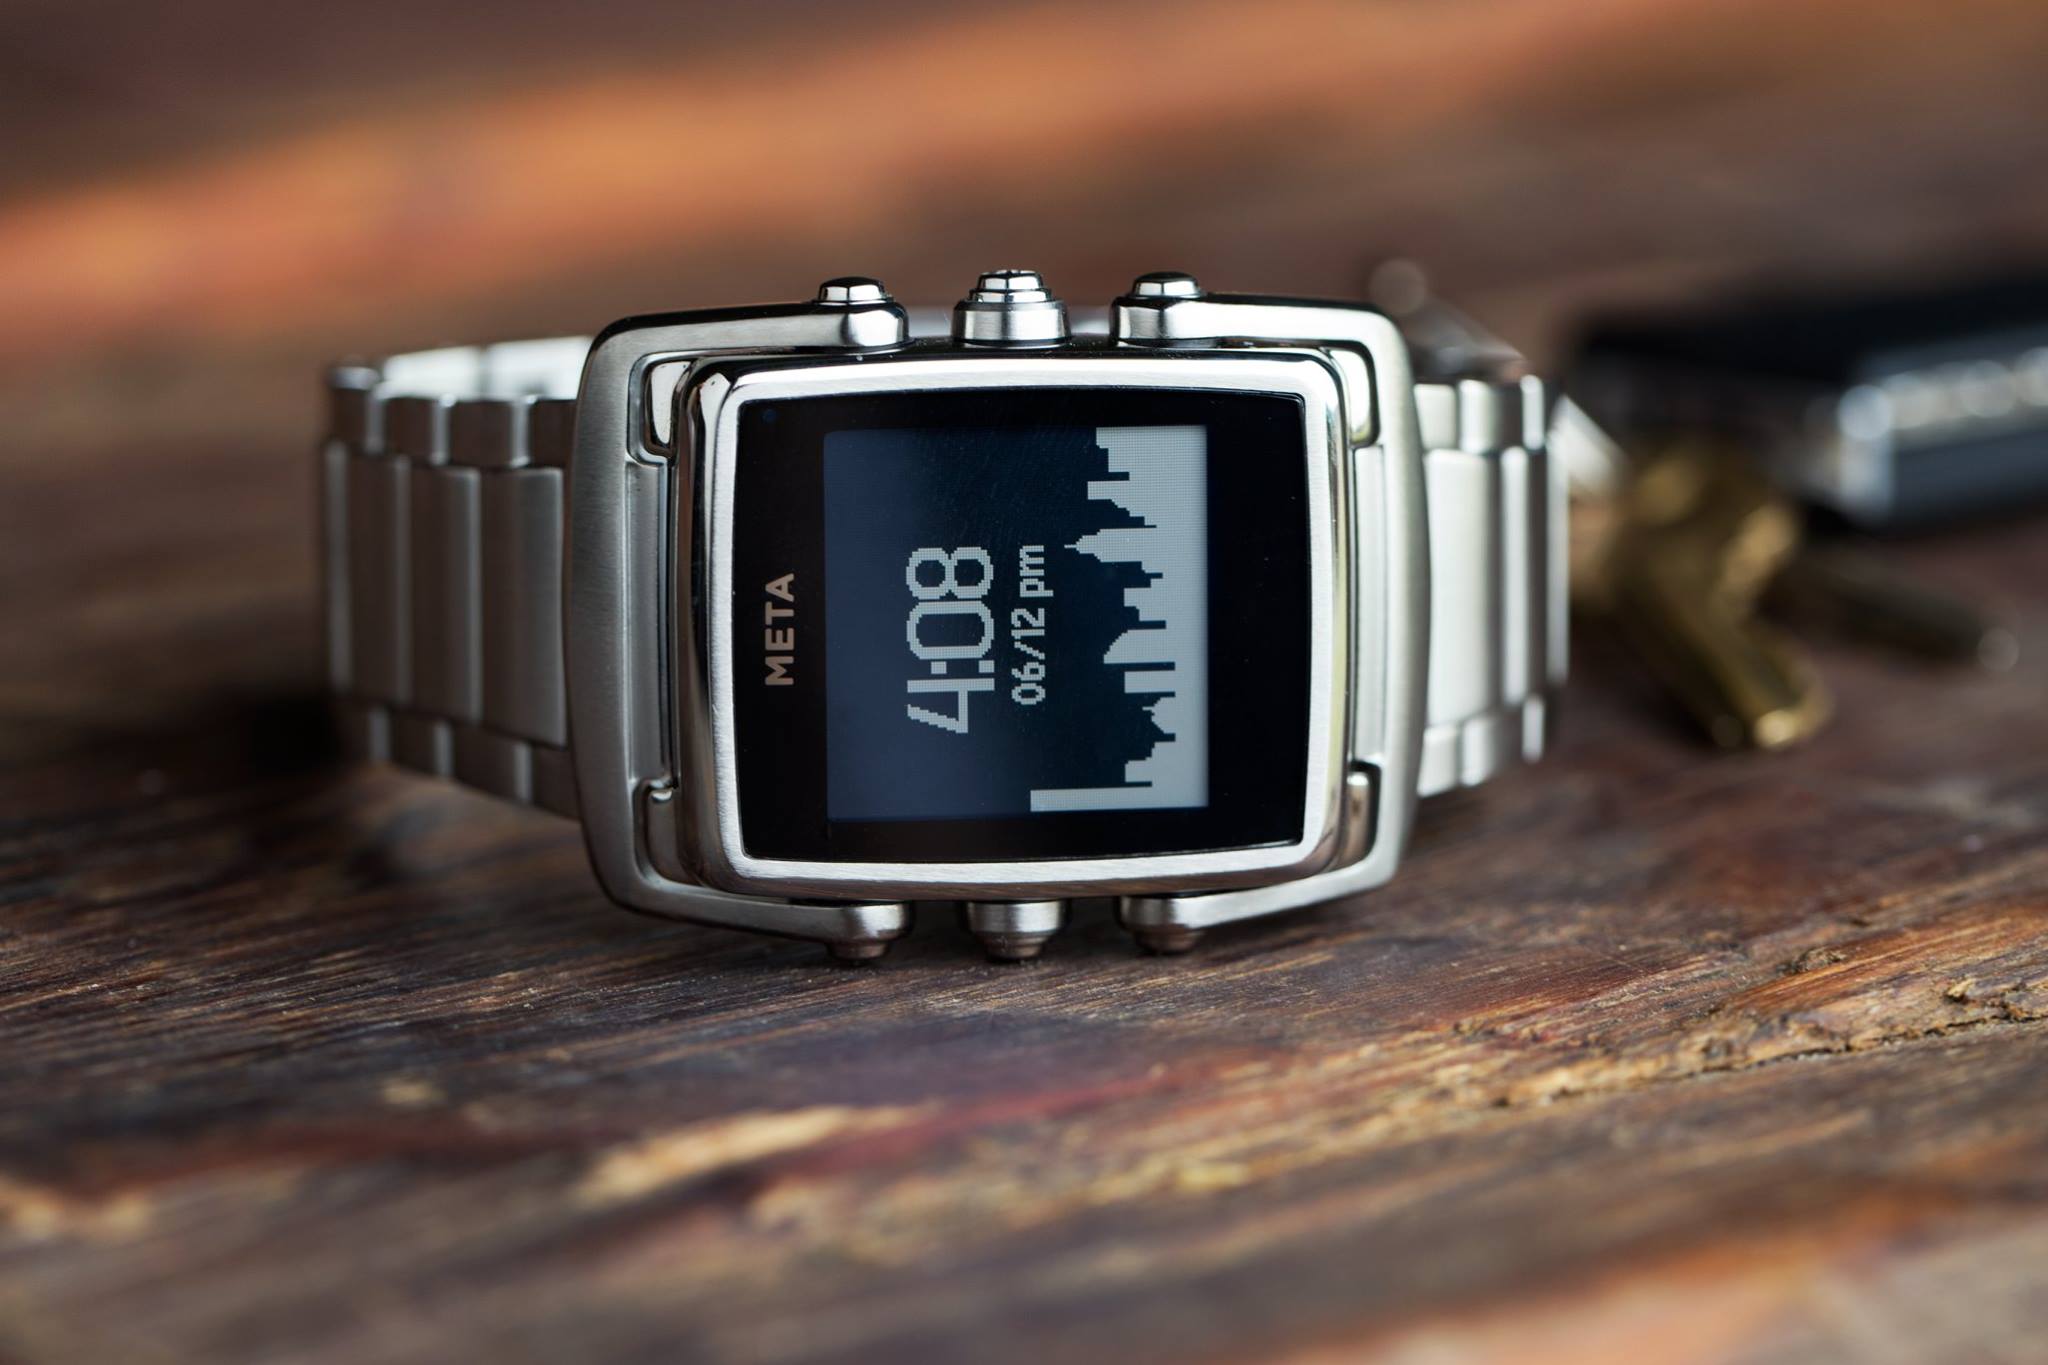 Meta M1 Smartwatch Design